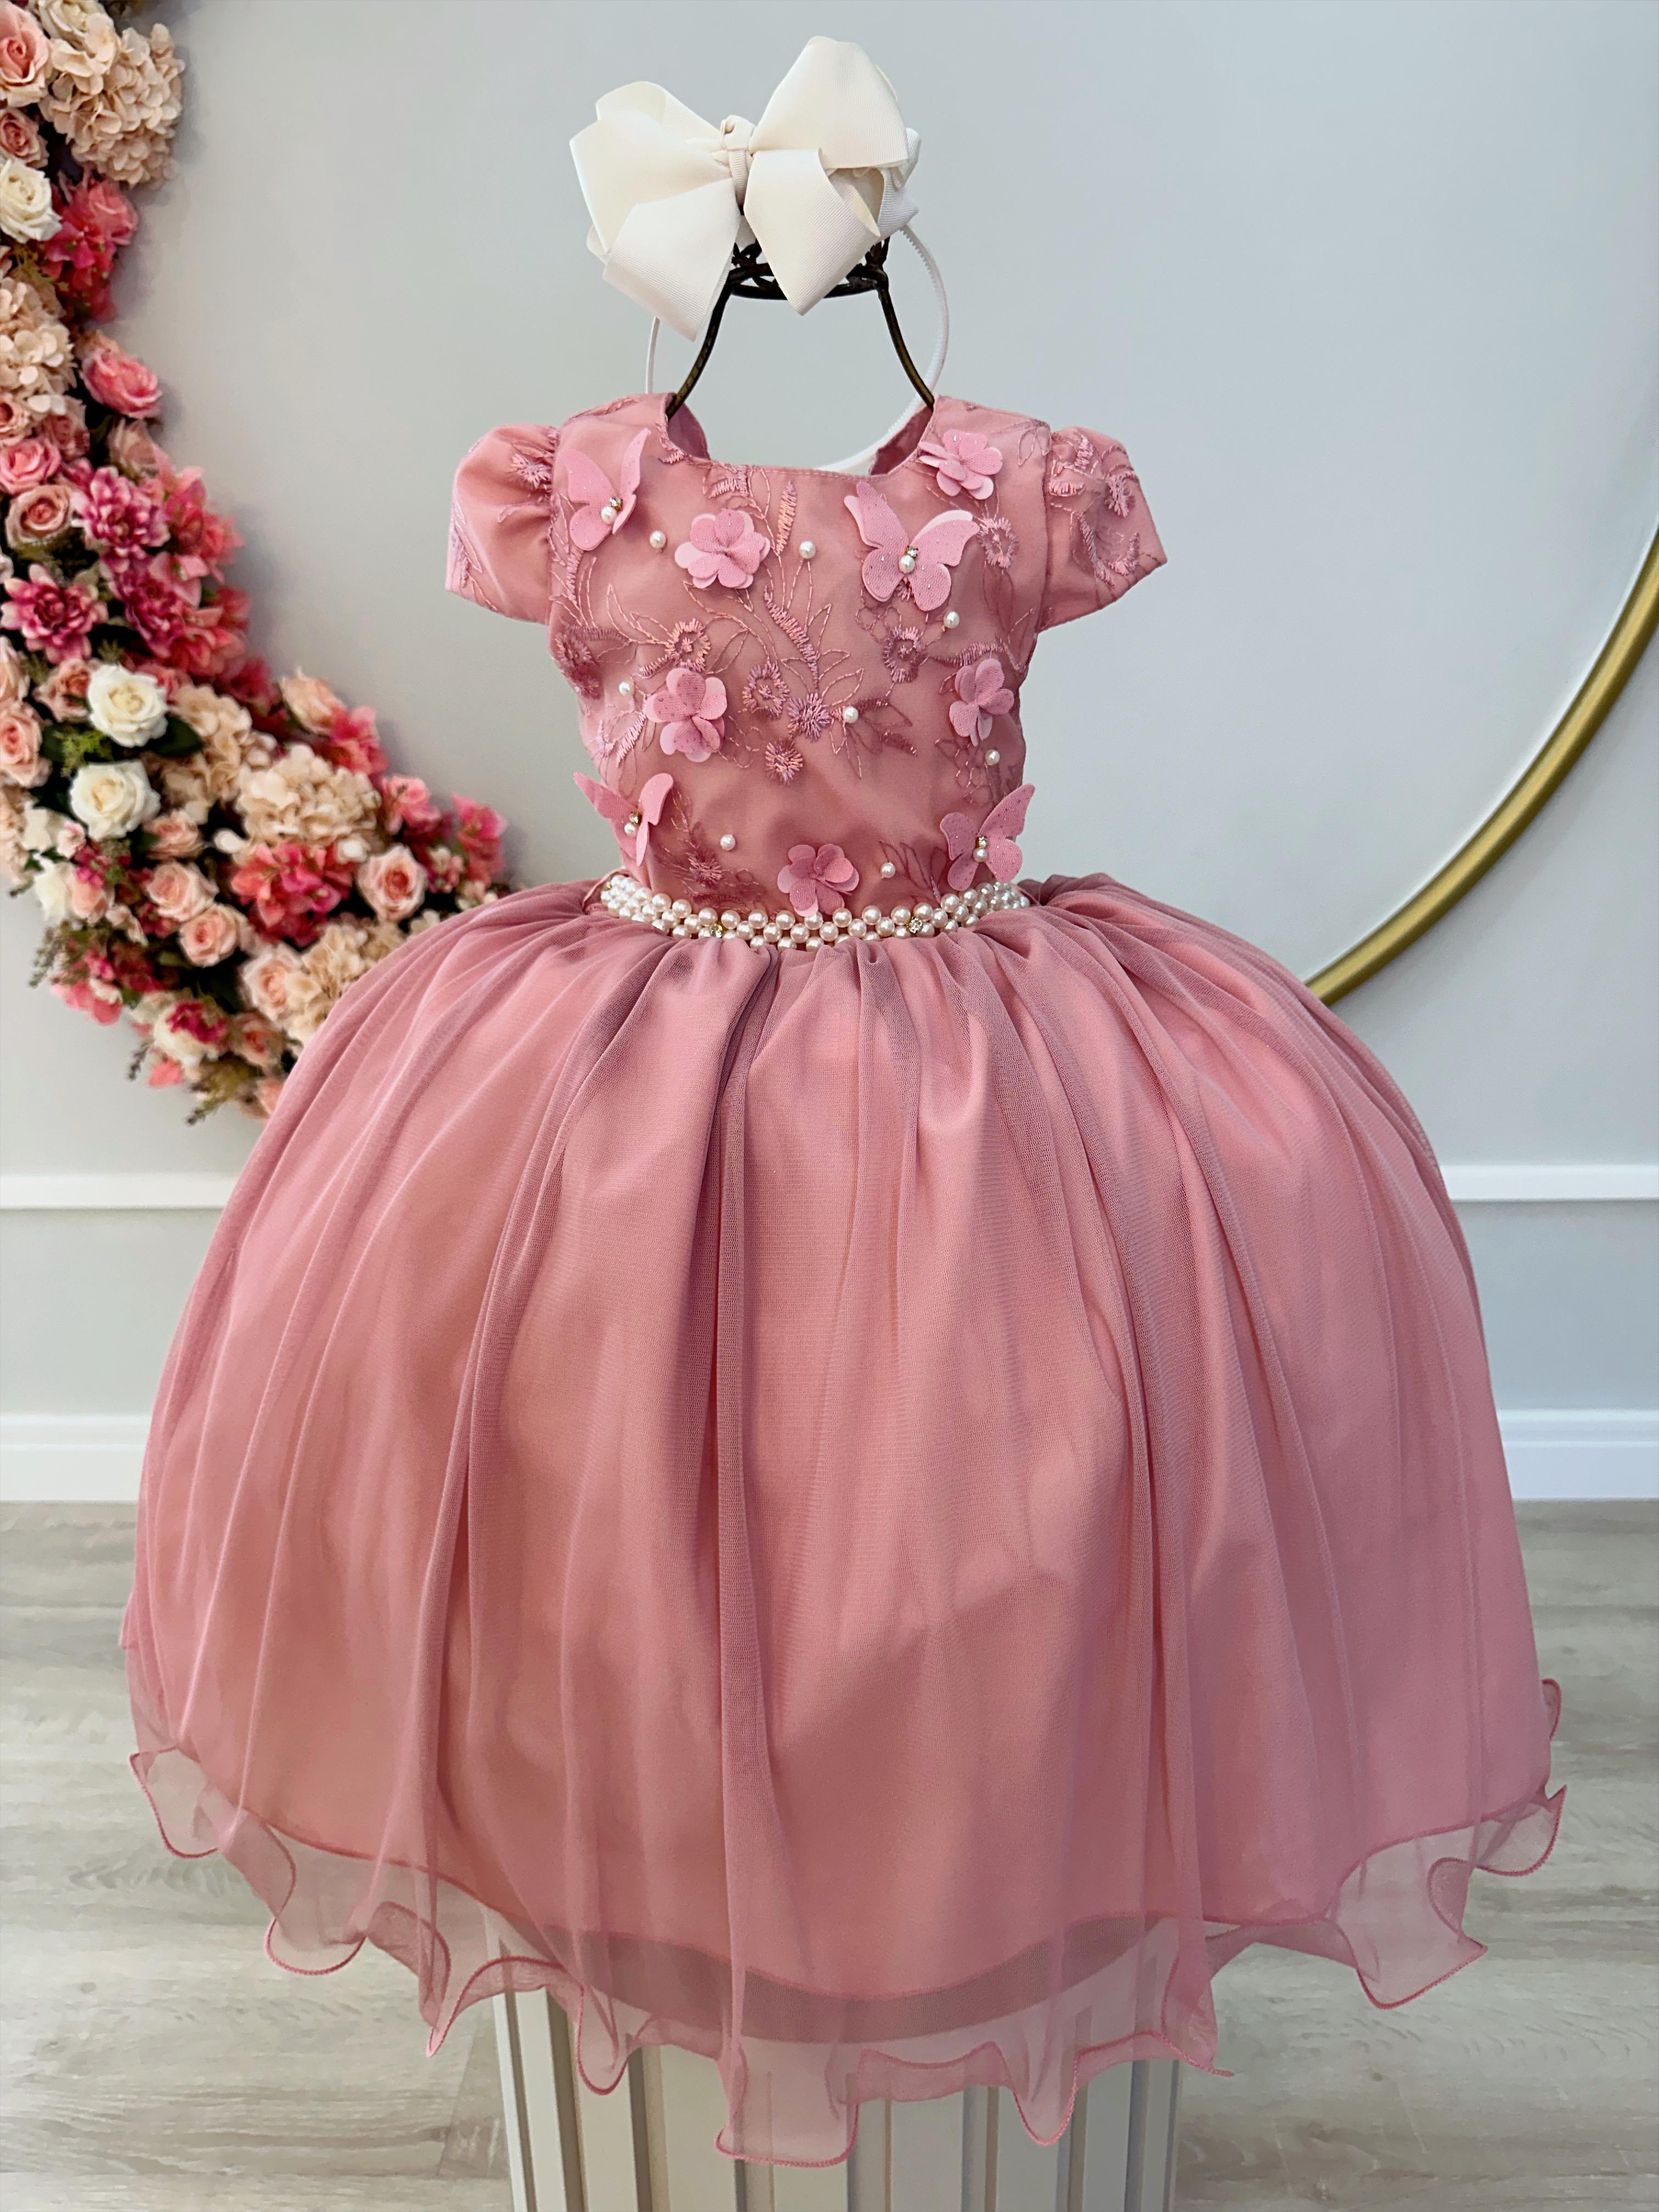 Vestido Infantil Rose Damas C/ Renda e Aplique Borboletas